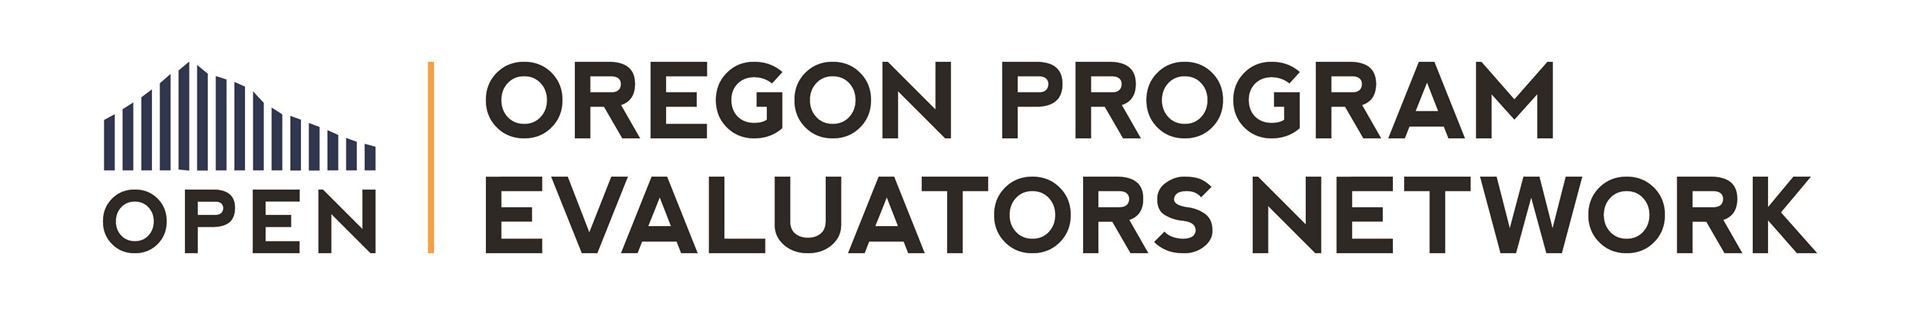 Oregon Program Evaluators Network (OPEN) logo